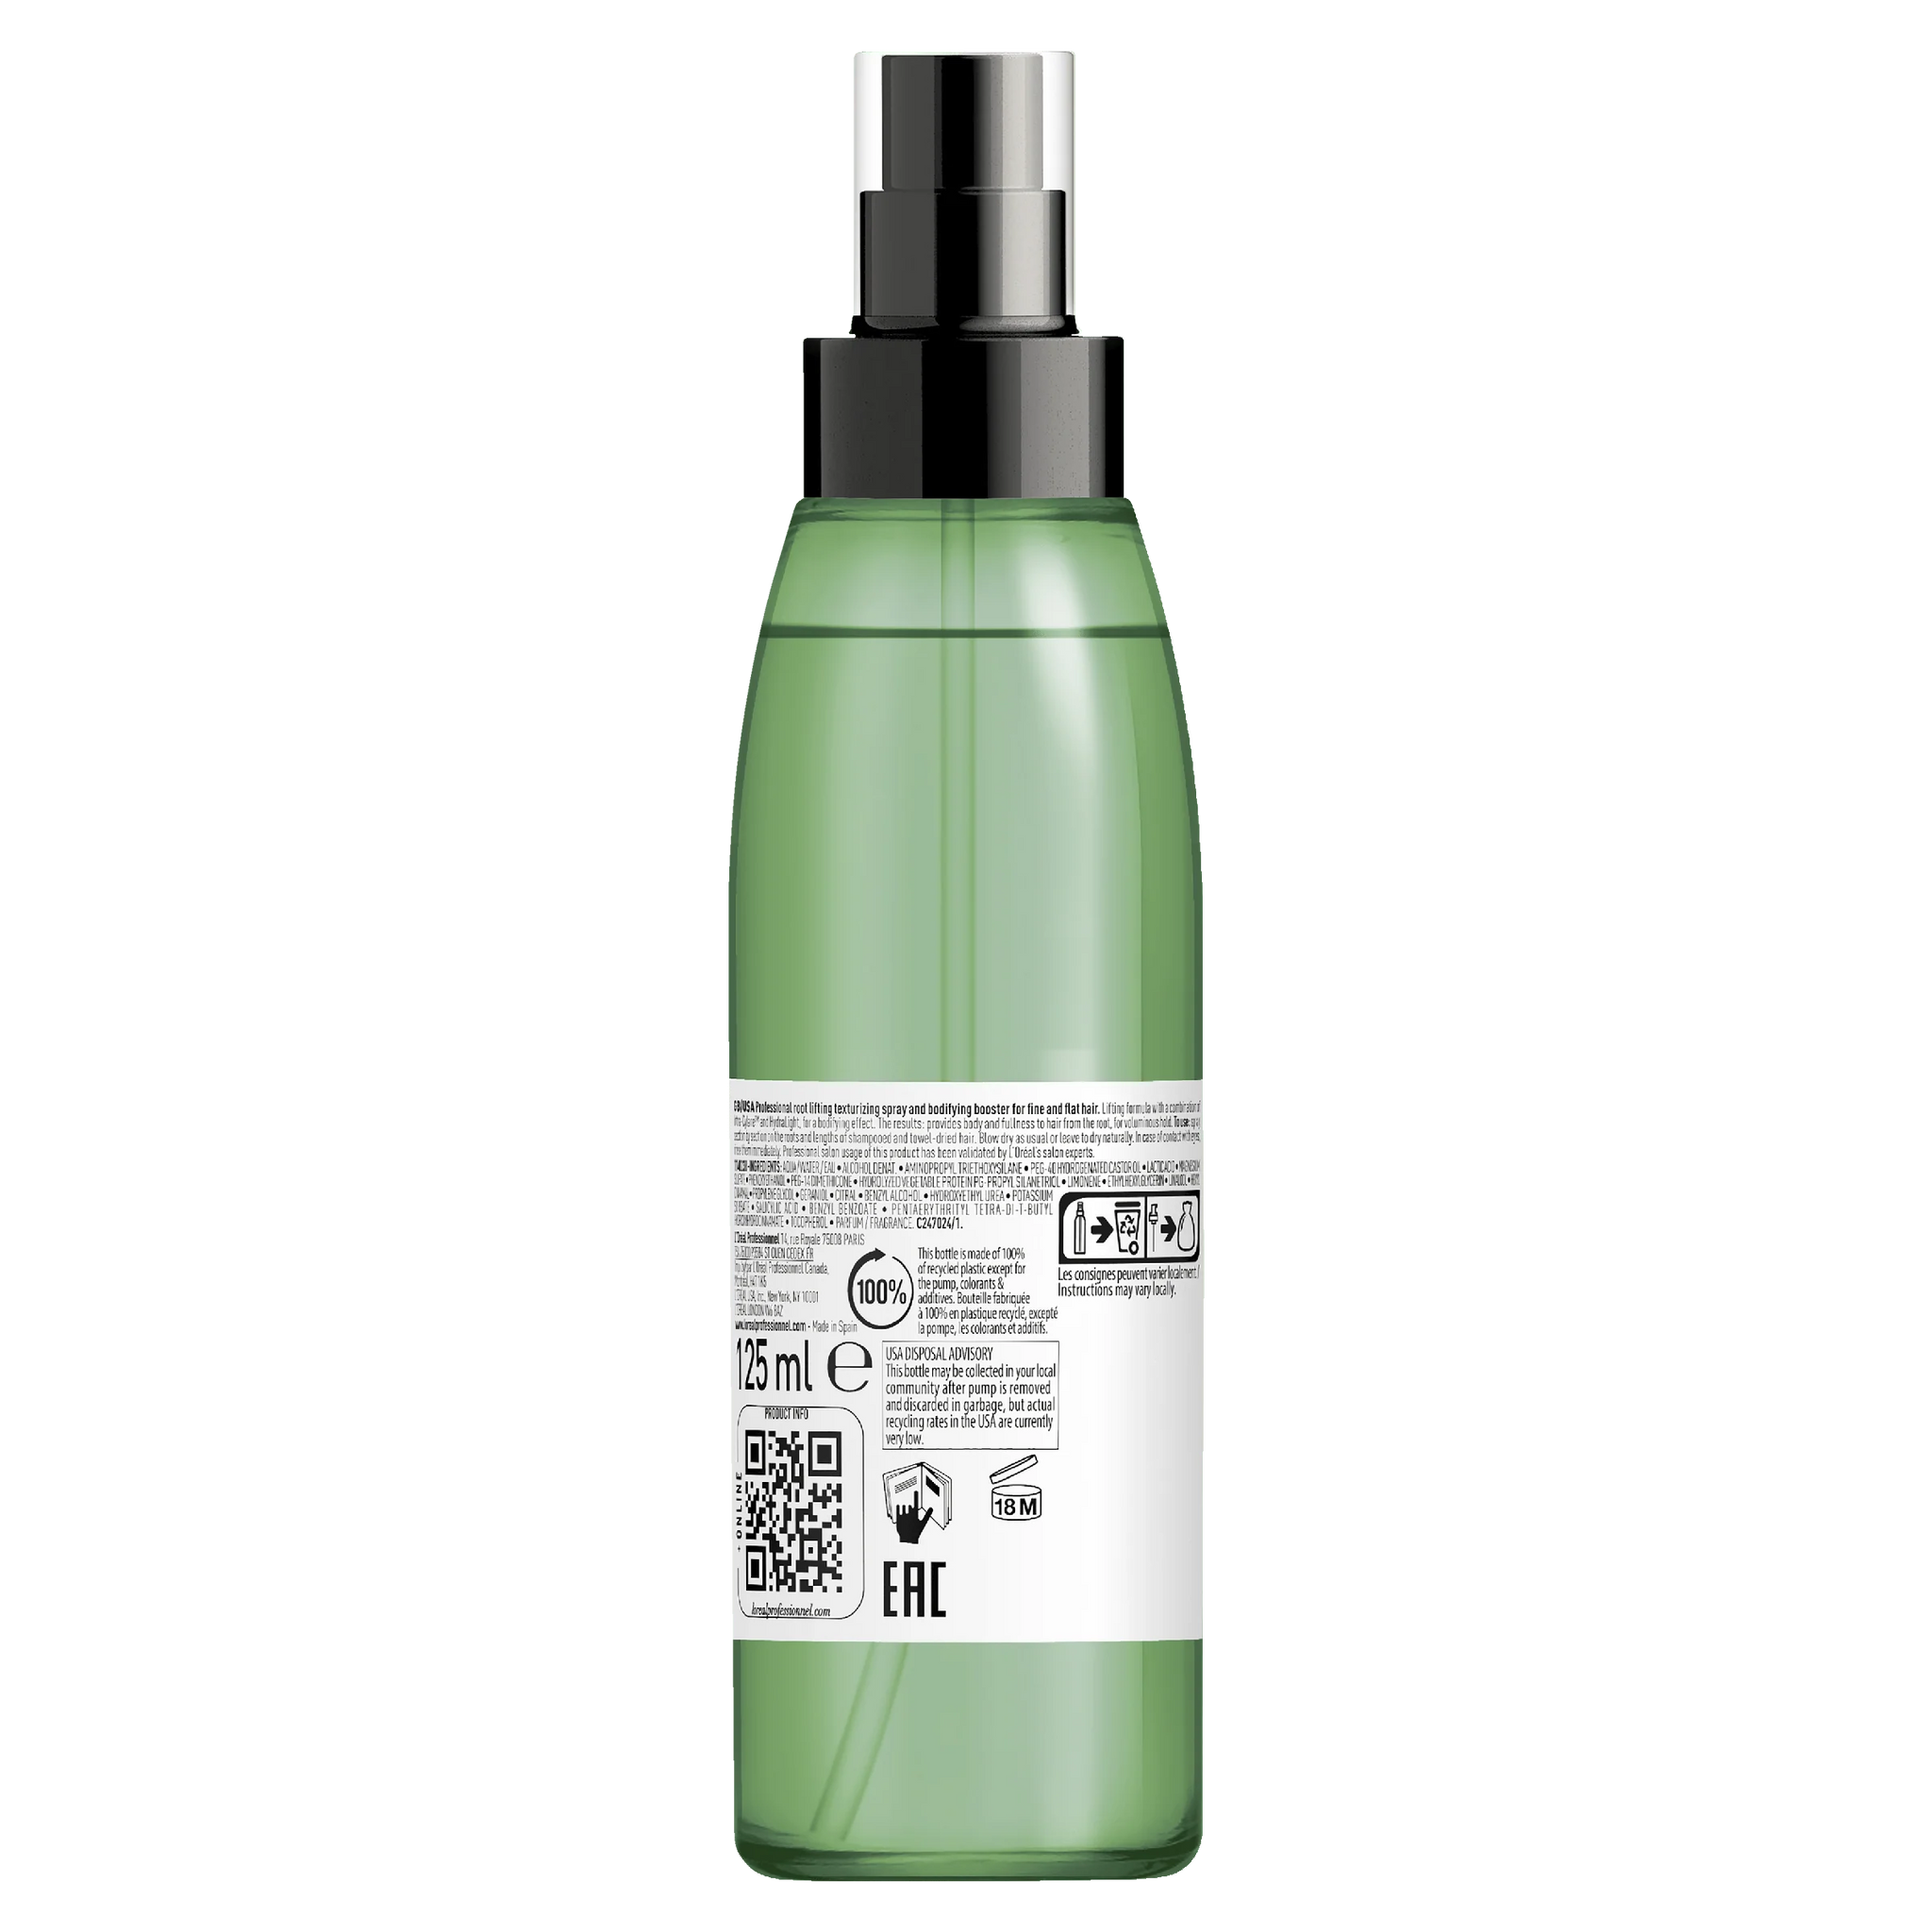 L'Oréal Professionnel Volumetry Texturizing Spray 125ml